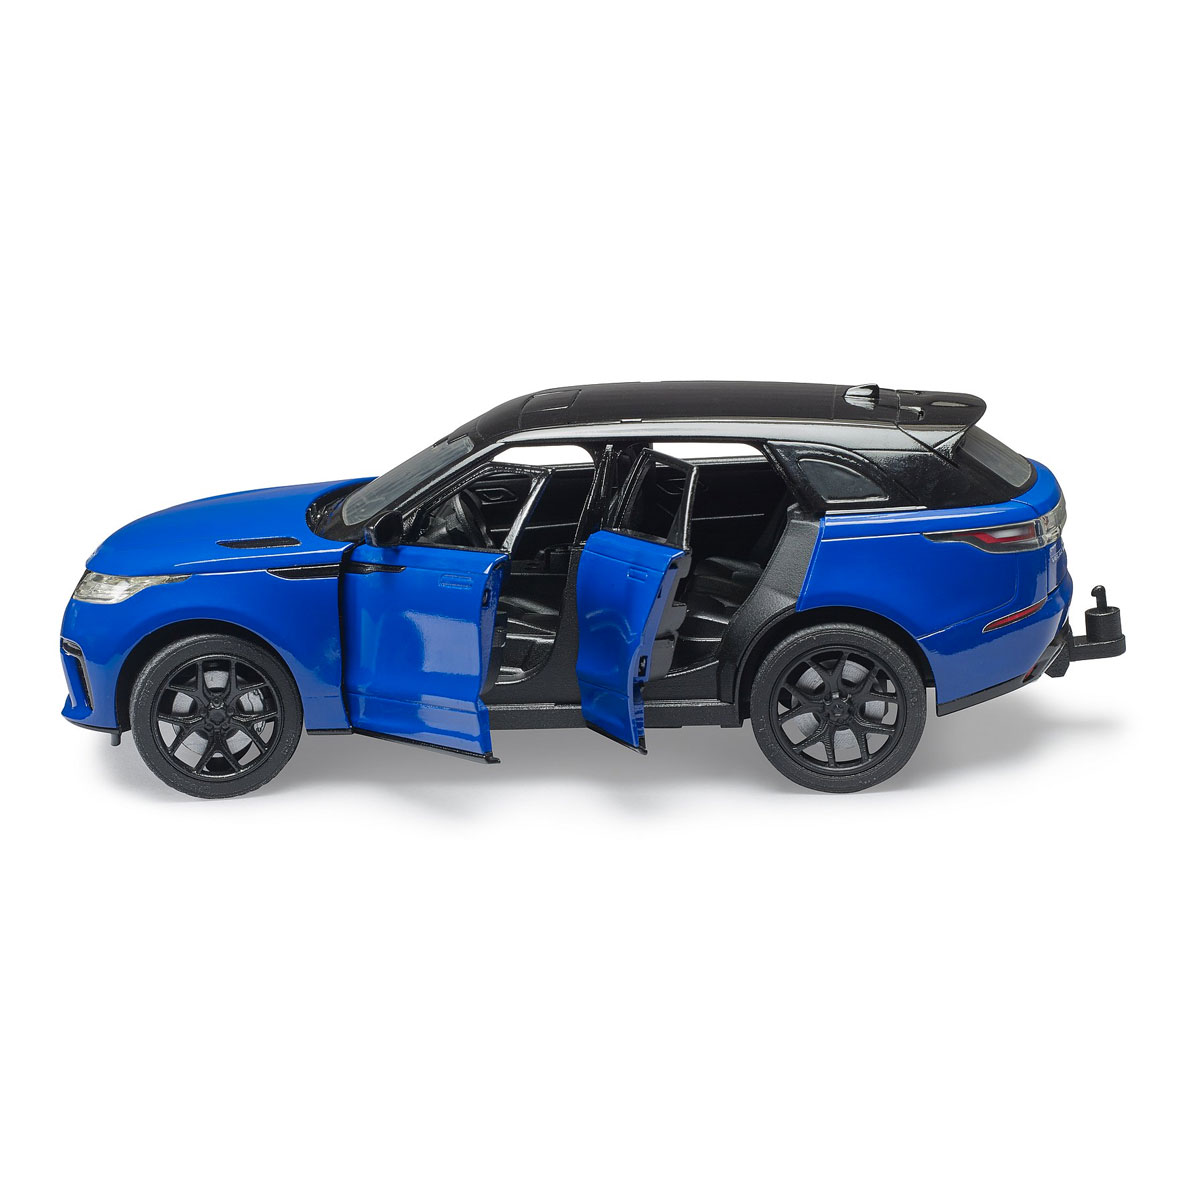 Coche SUV Range Rover Velar – Ref. Bruder 2880